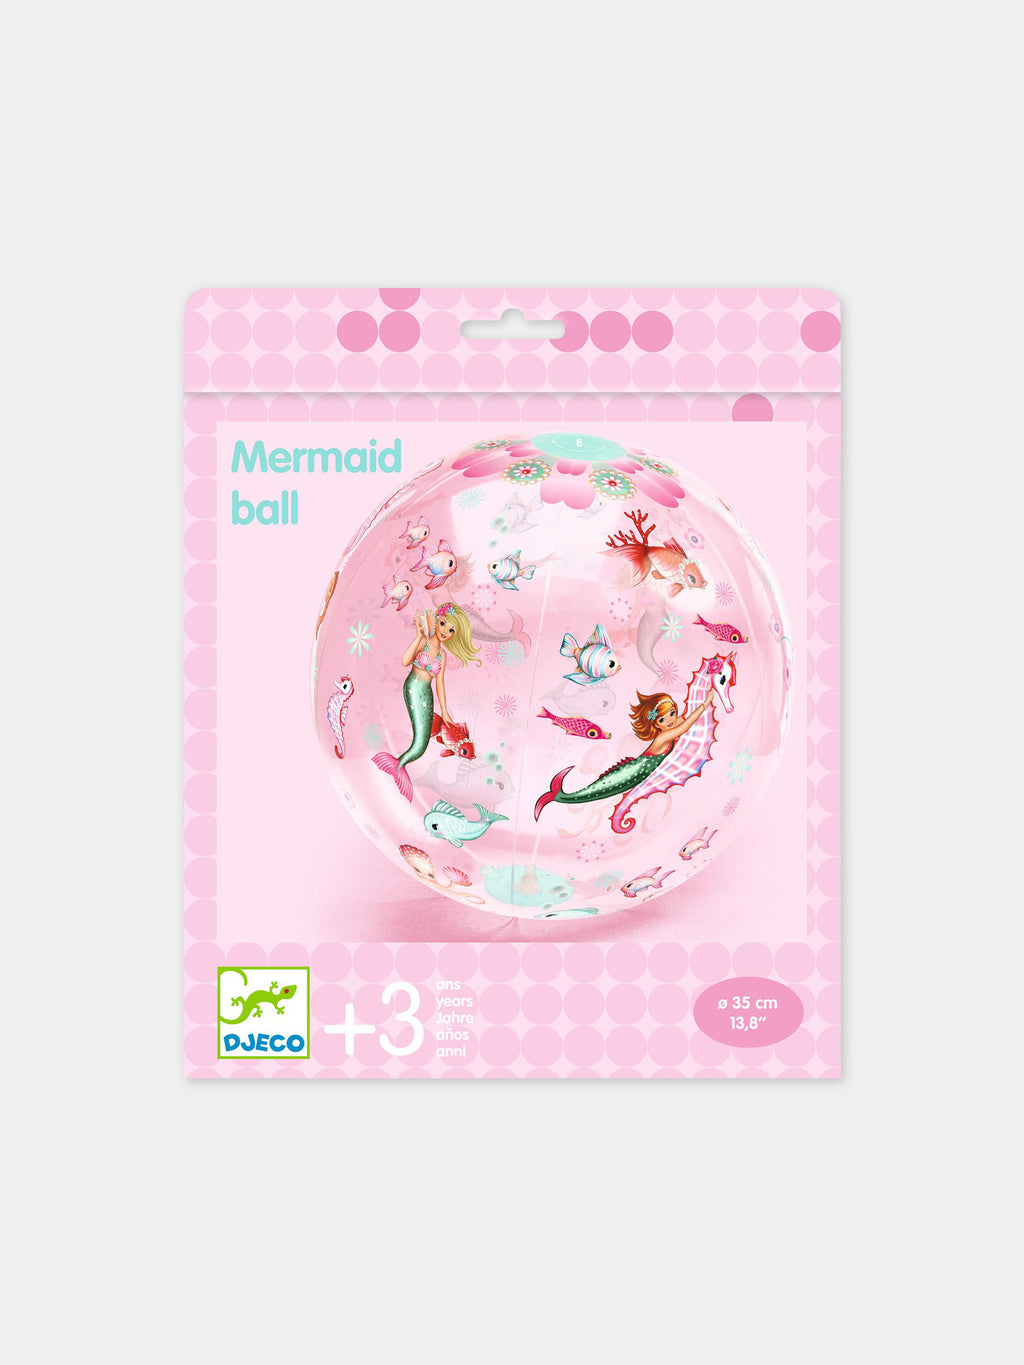 Transparent ball for kids